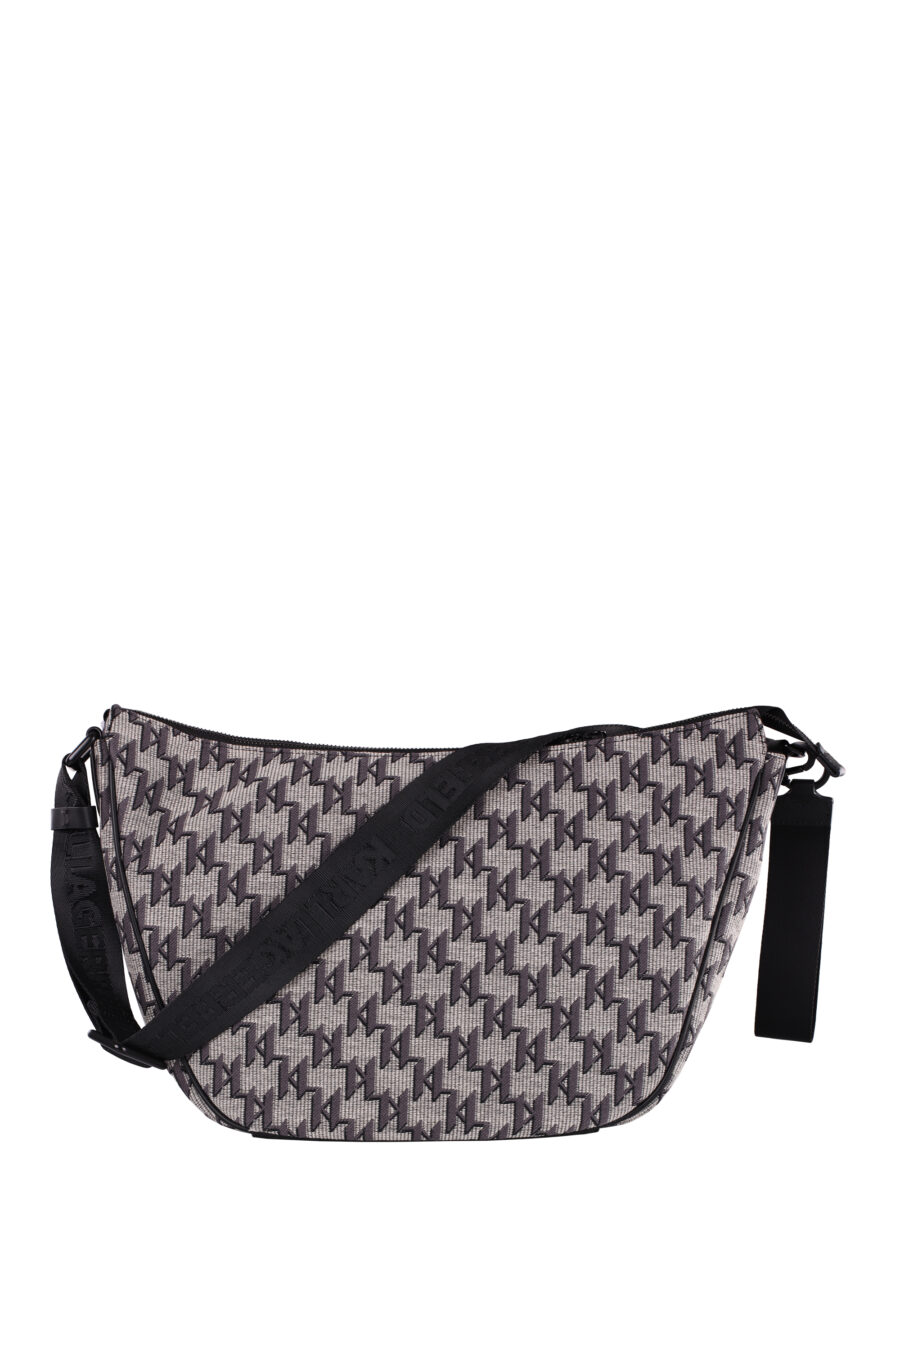 Hobo style shoulder bag with monogram logo - IMG 6054